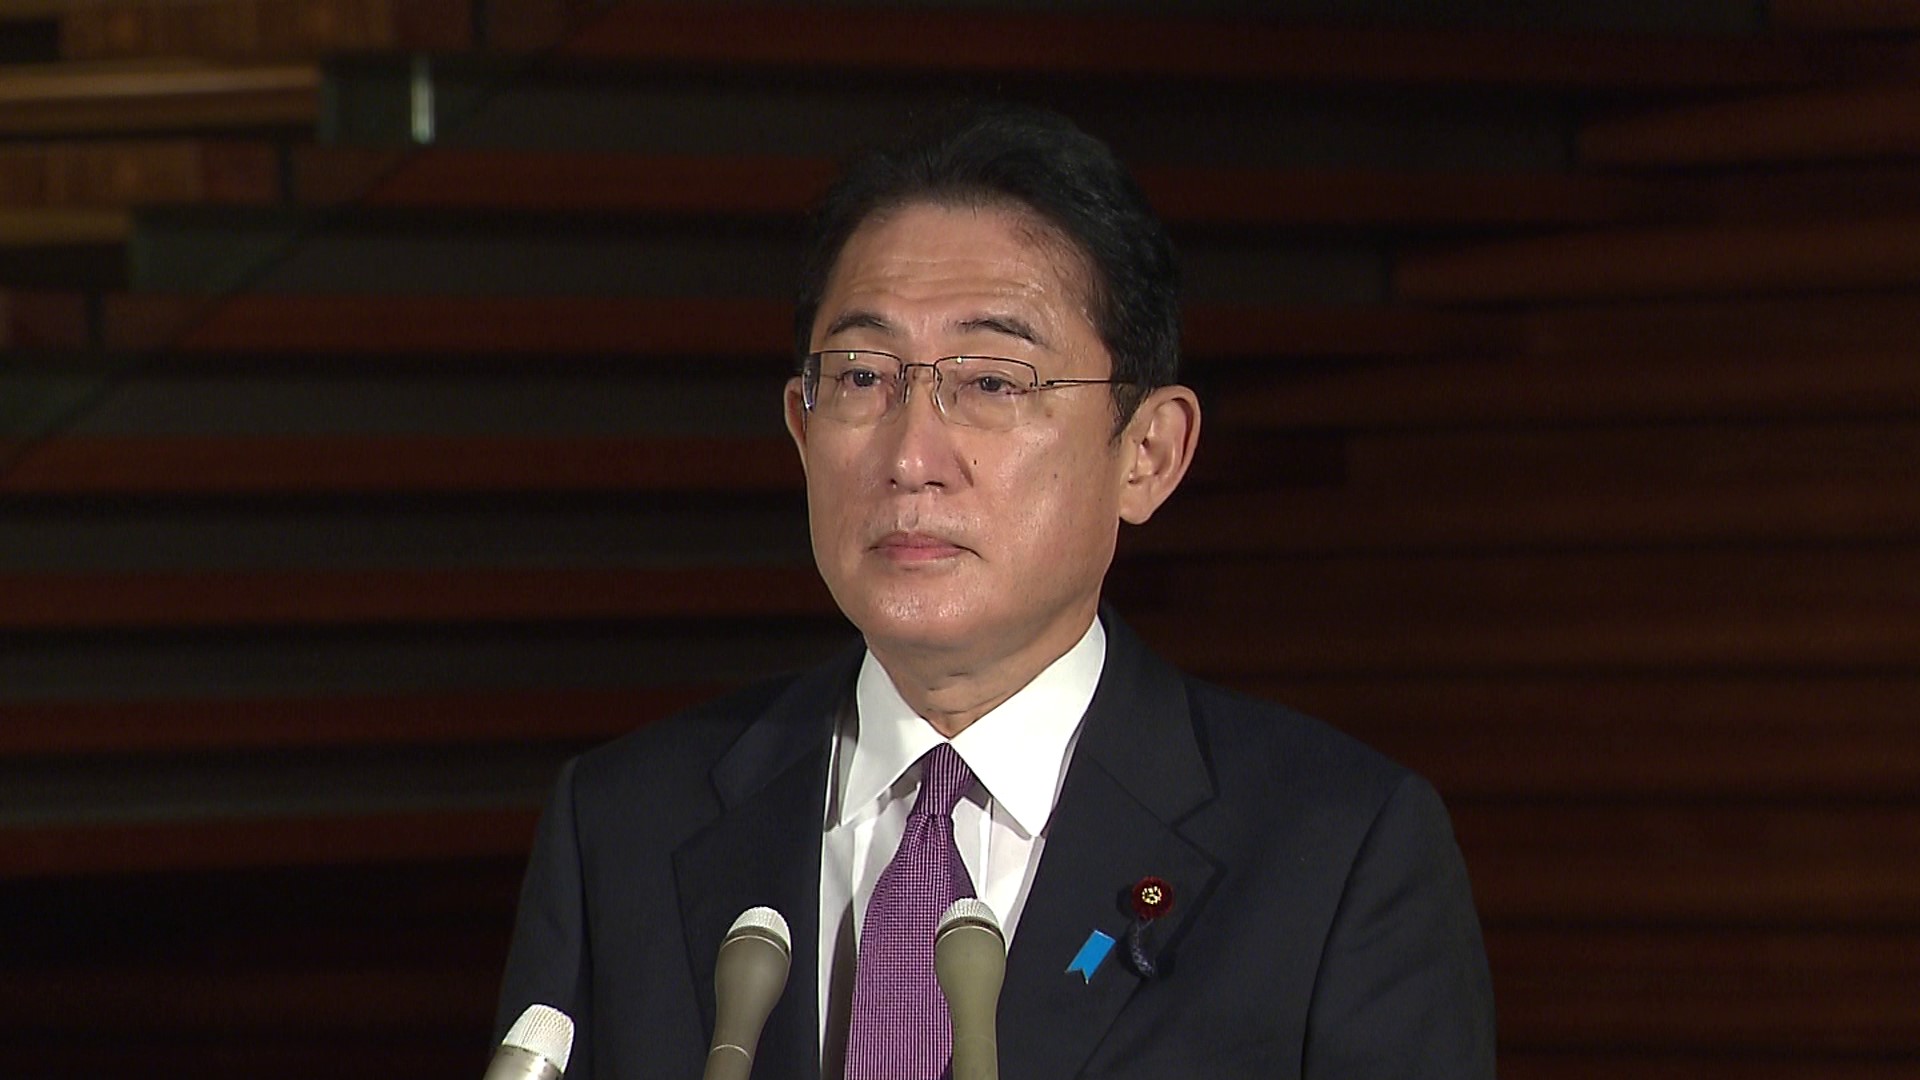 Prime Minister Kishida speaking to the press